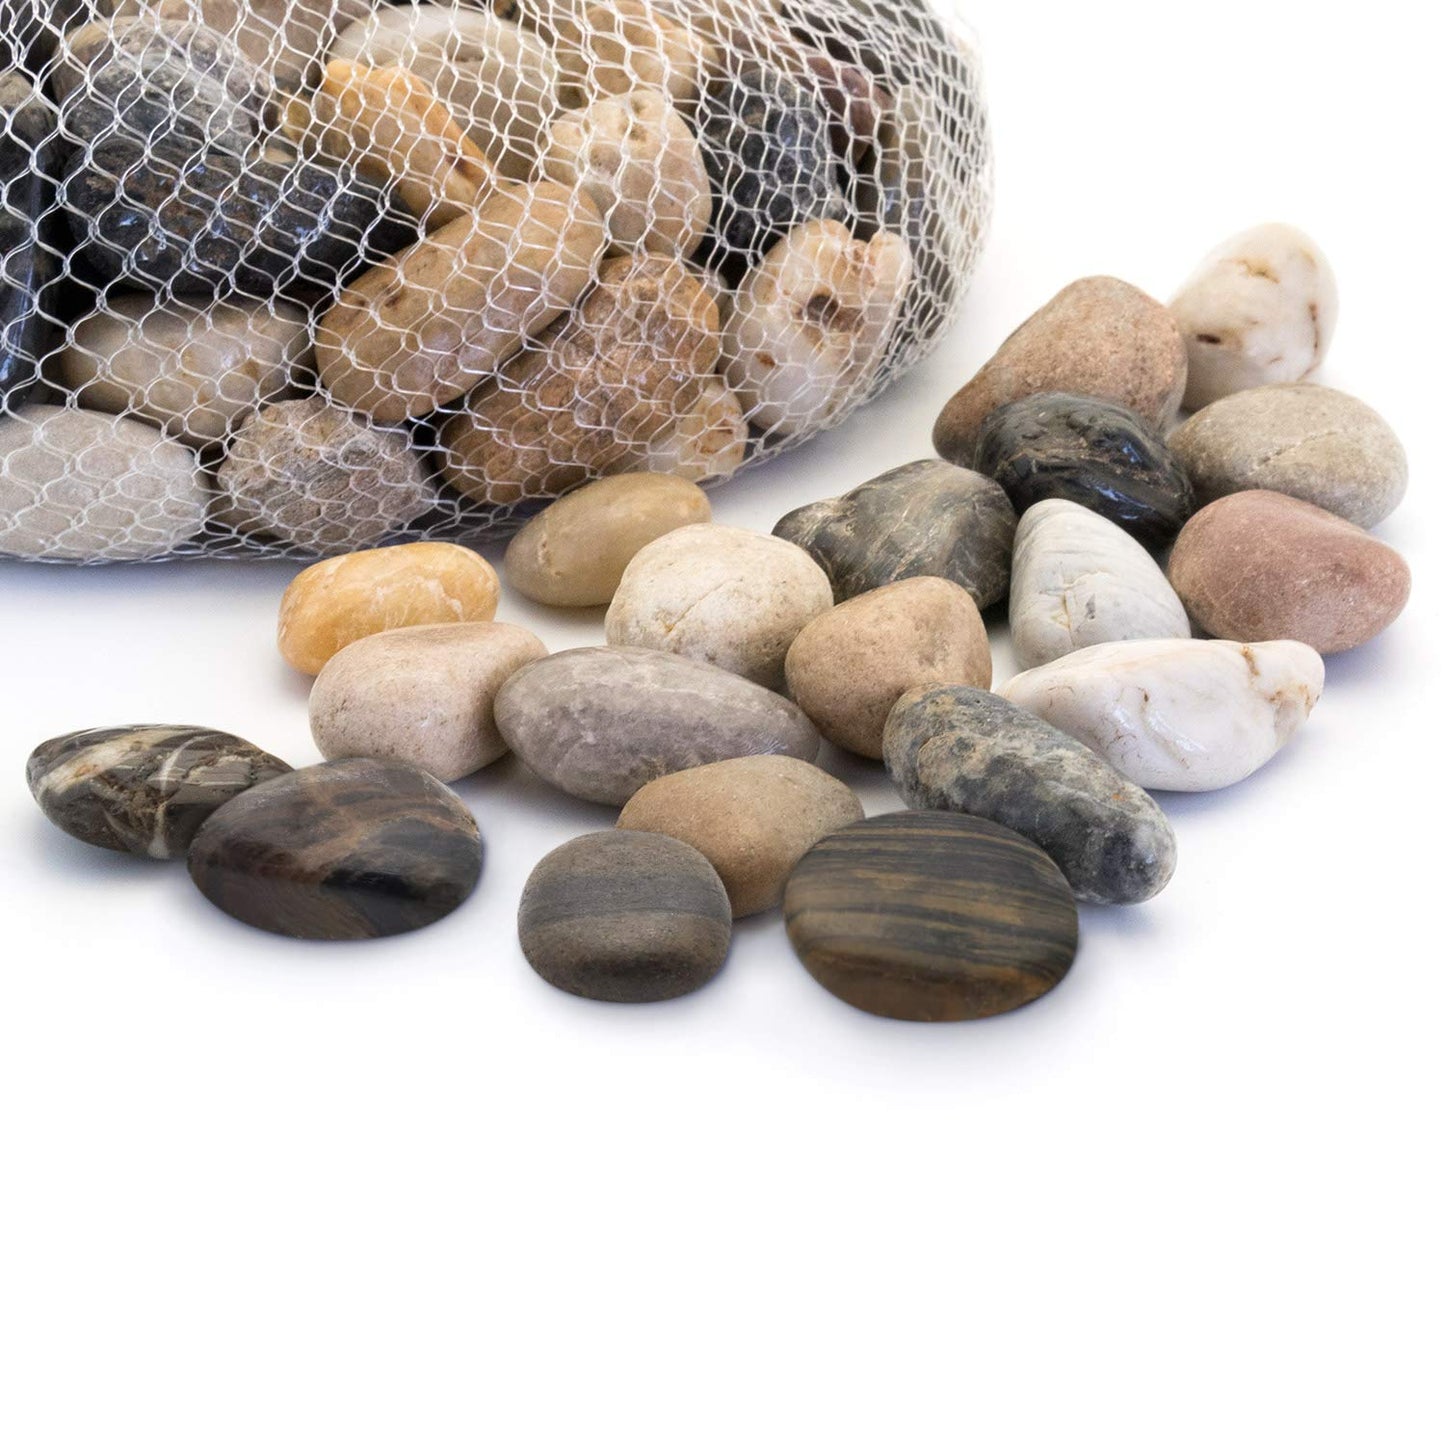 5LBS River Rocks Decorative Ornamental Pebbles, Garden Landscaping Stones, Gravel Filler for Plants, Vases, Succulents, Home Decor, Aquariums, Crafting, Animal Habitat - Large Natural